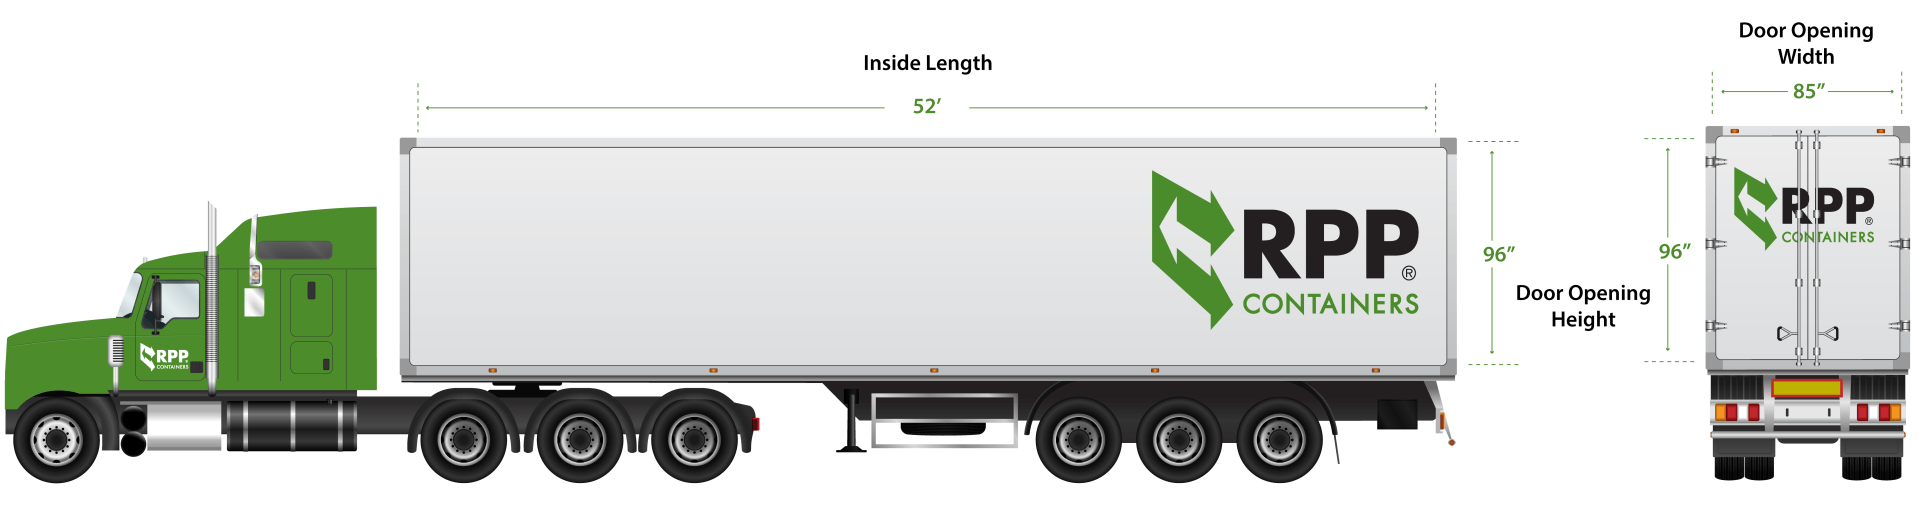 53' truck dimensions